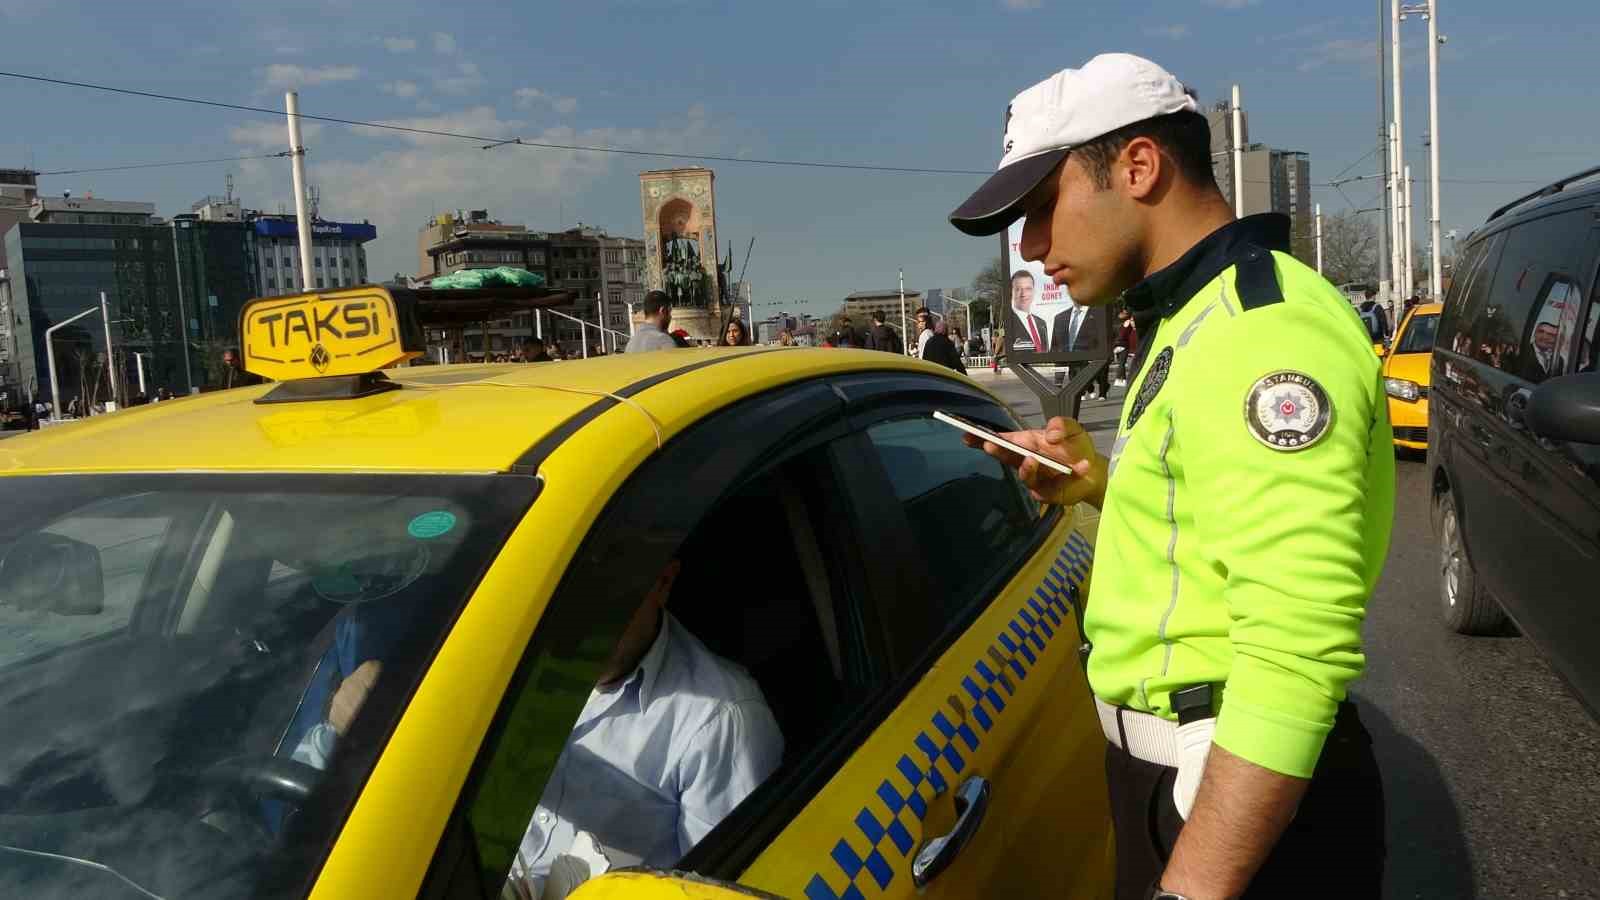 taksimde ticari taksi denetimi 39 bin 155 lira ceza kesildi 4 kpyY2JfU